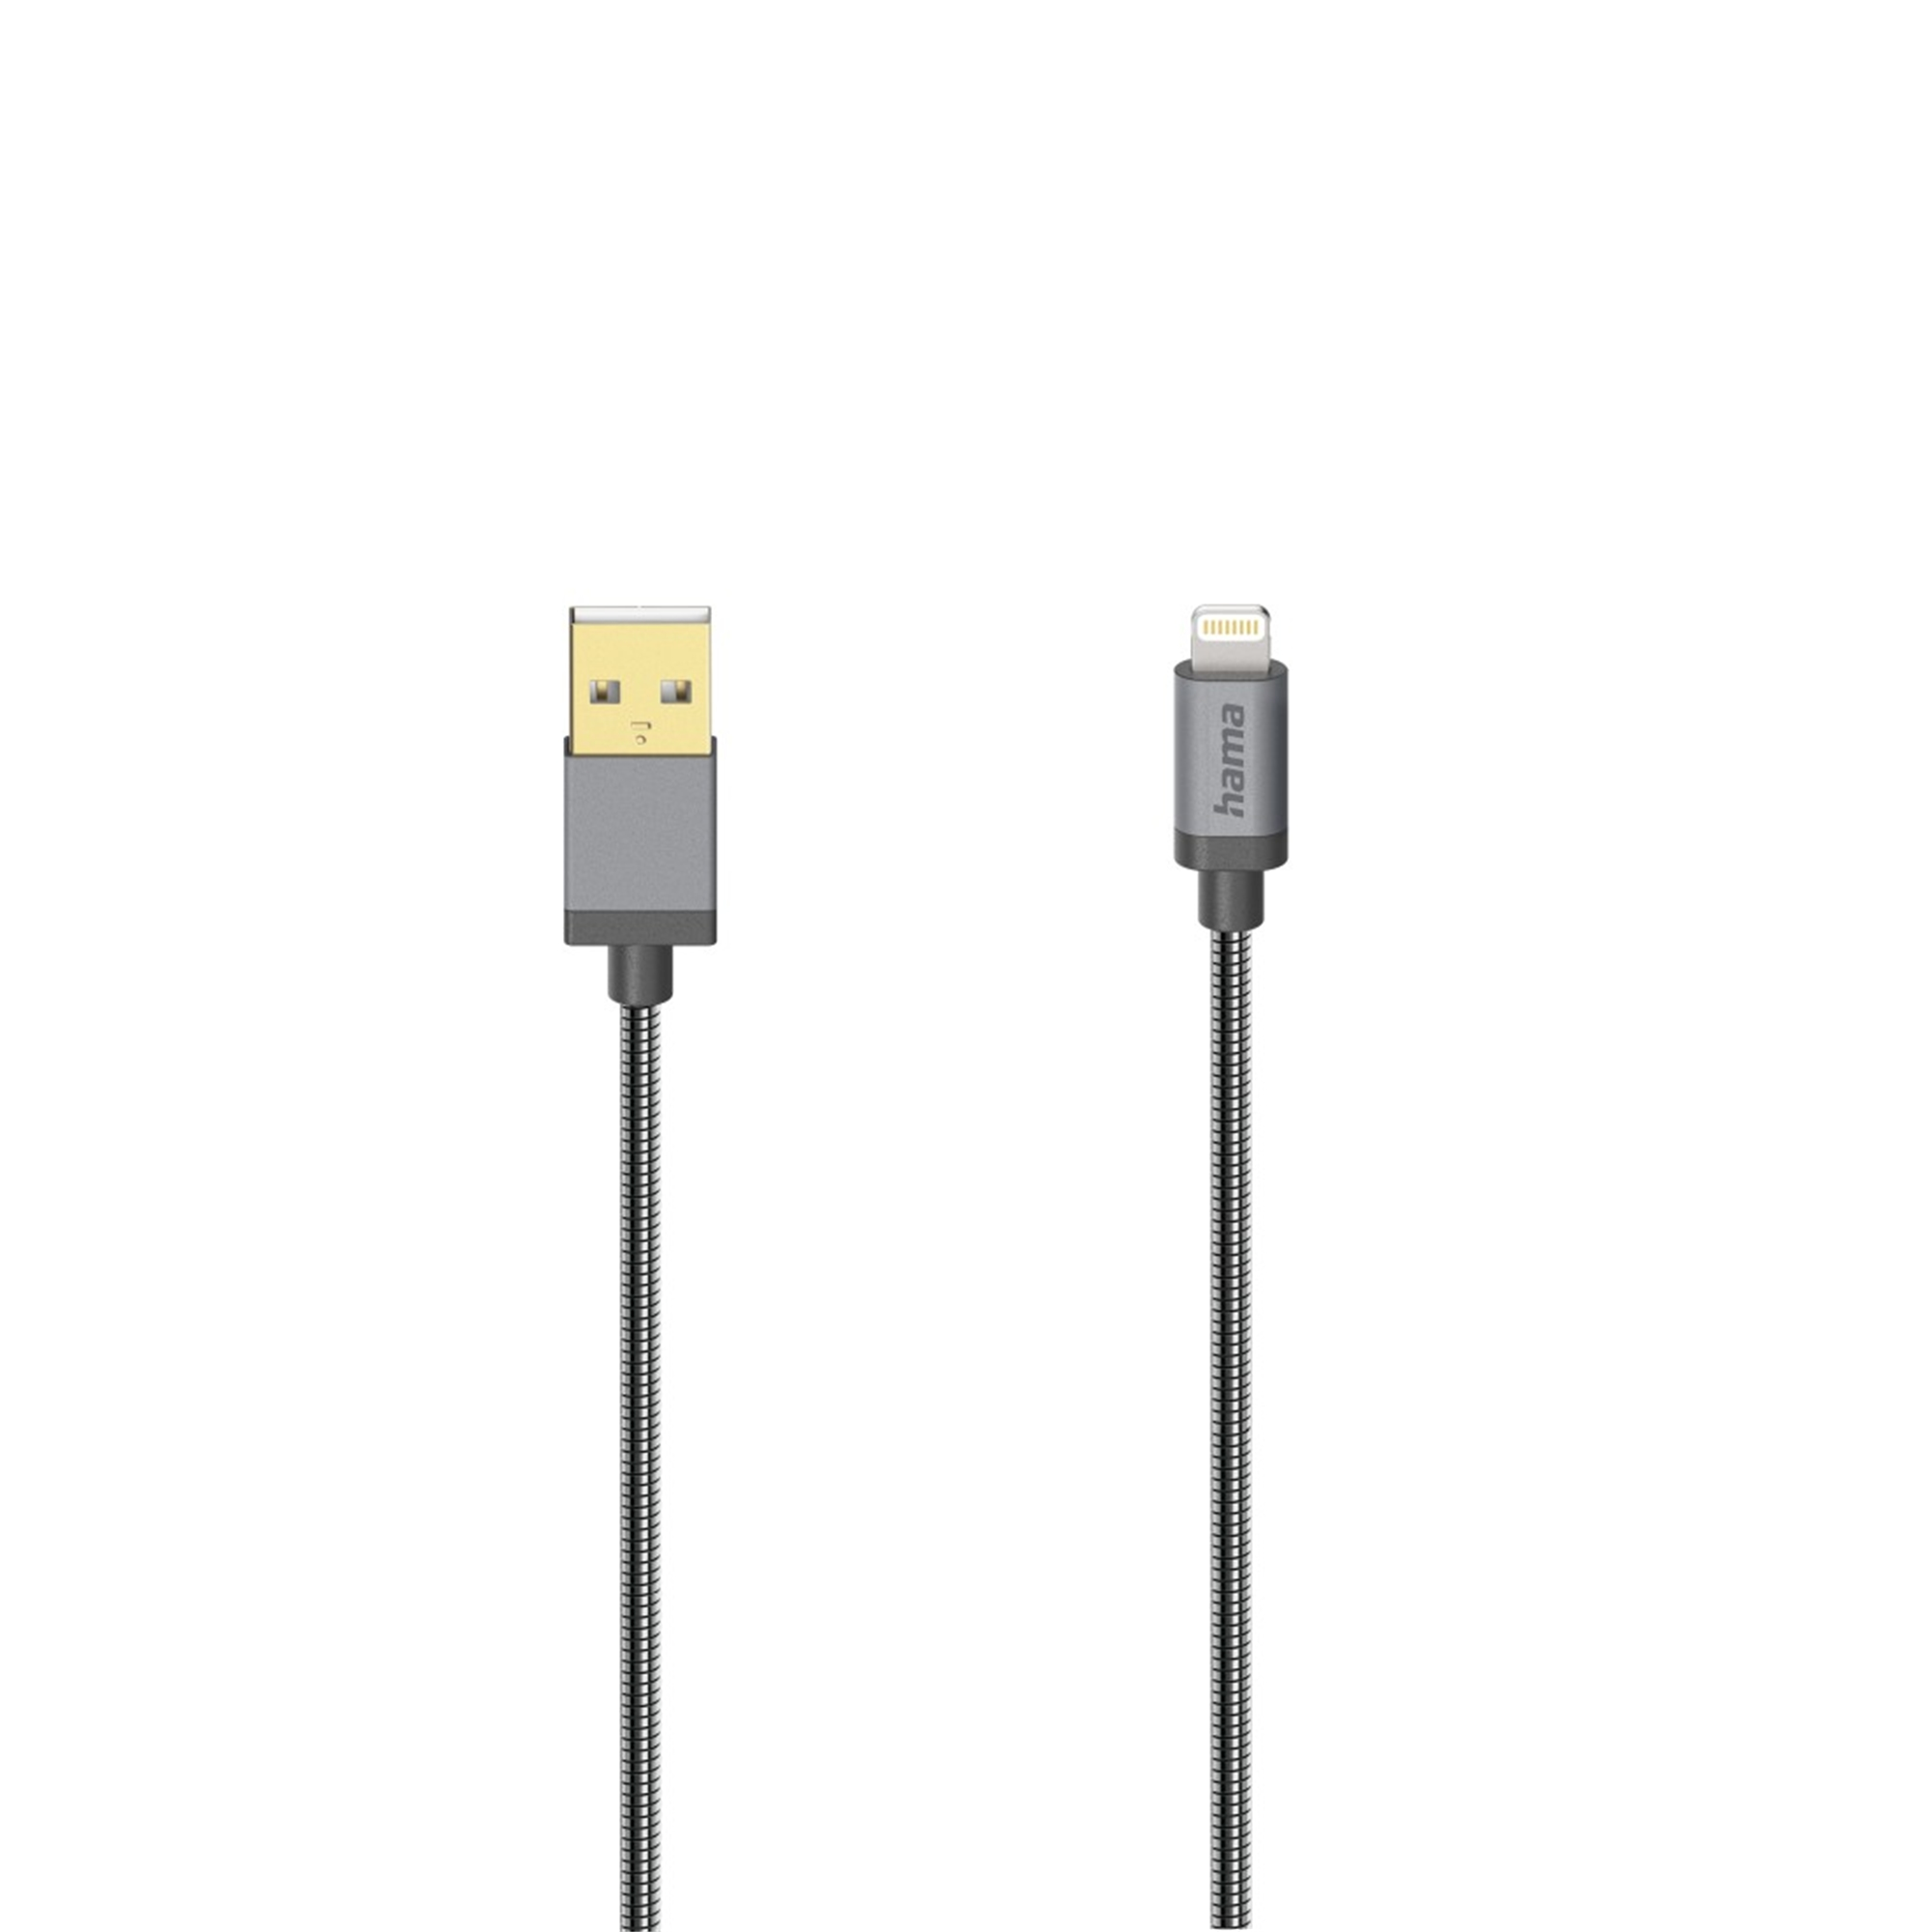 USB-Kabel für Lightning mit HAMA iPhone/iPad Connector